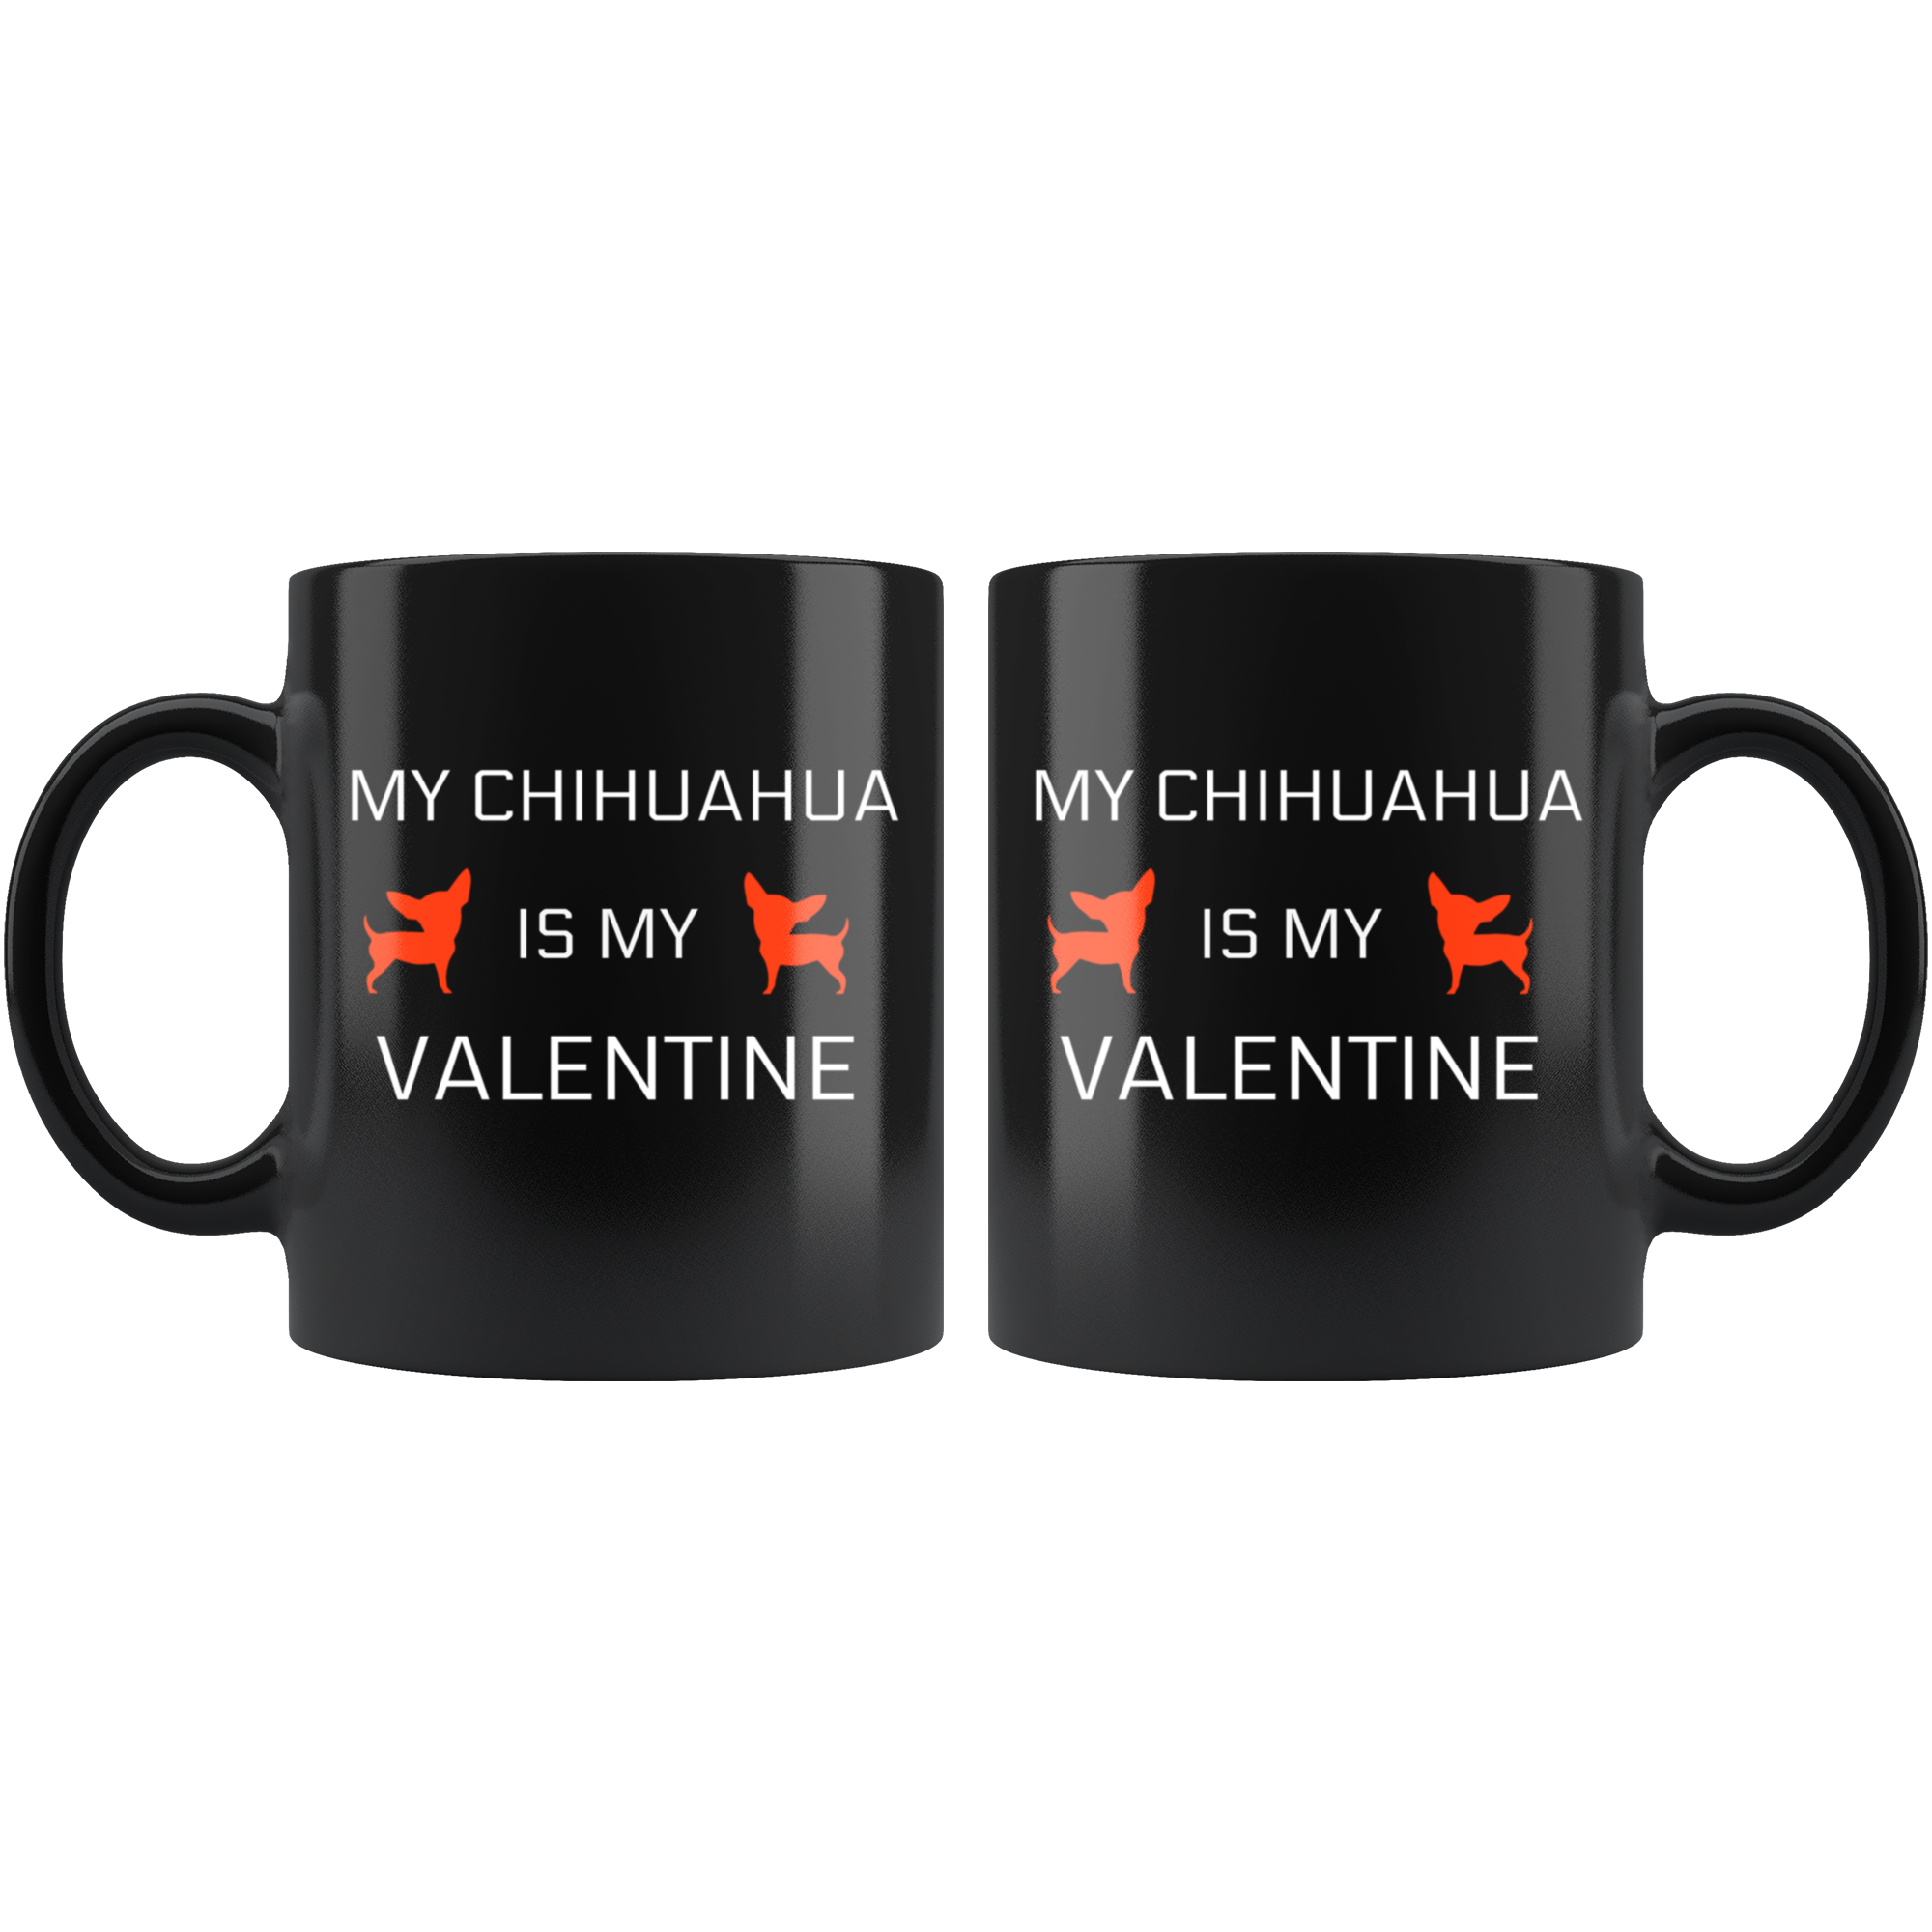 My Chihuahua Is my Valentine Mug